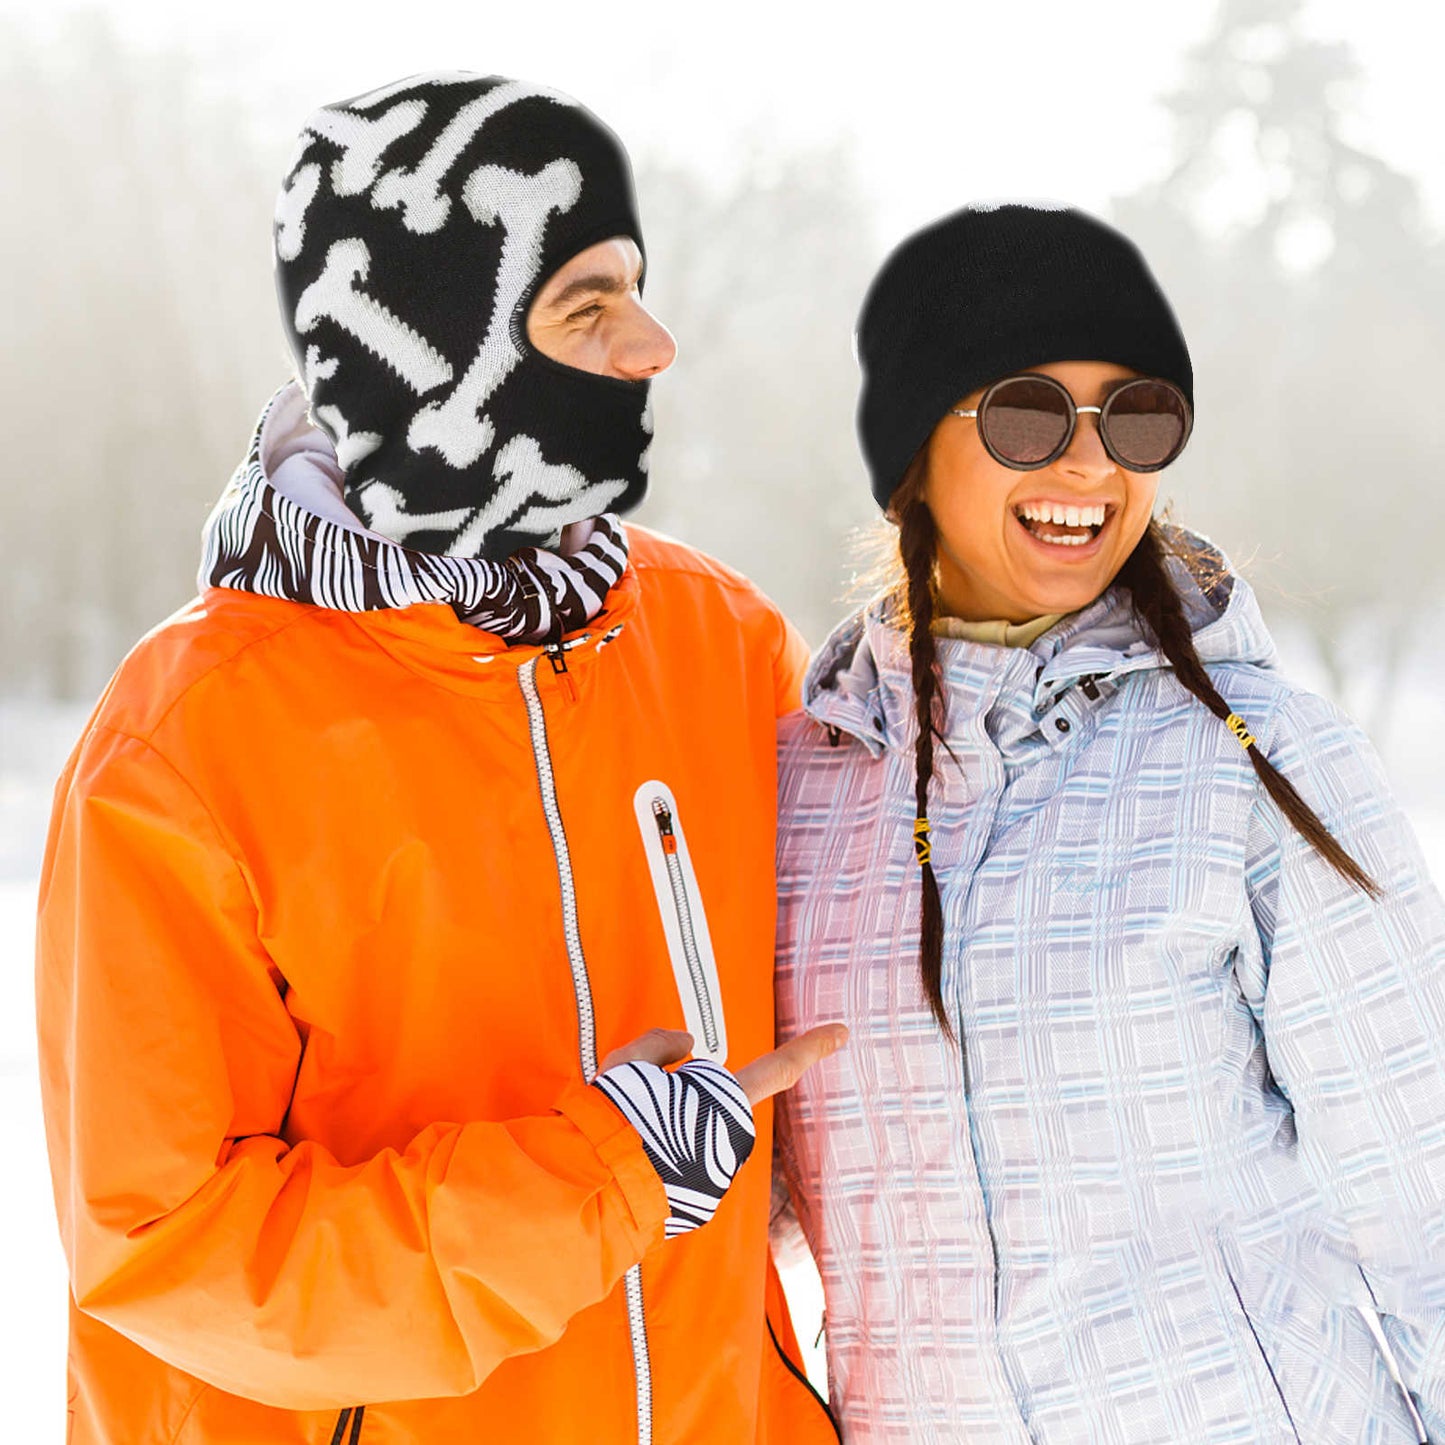 EvridWear 1 Pack Balaclava Face Mask, Thermal Winter Ski Mask for Cold Weather, Men Women (Bone)